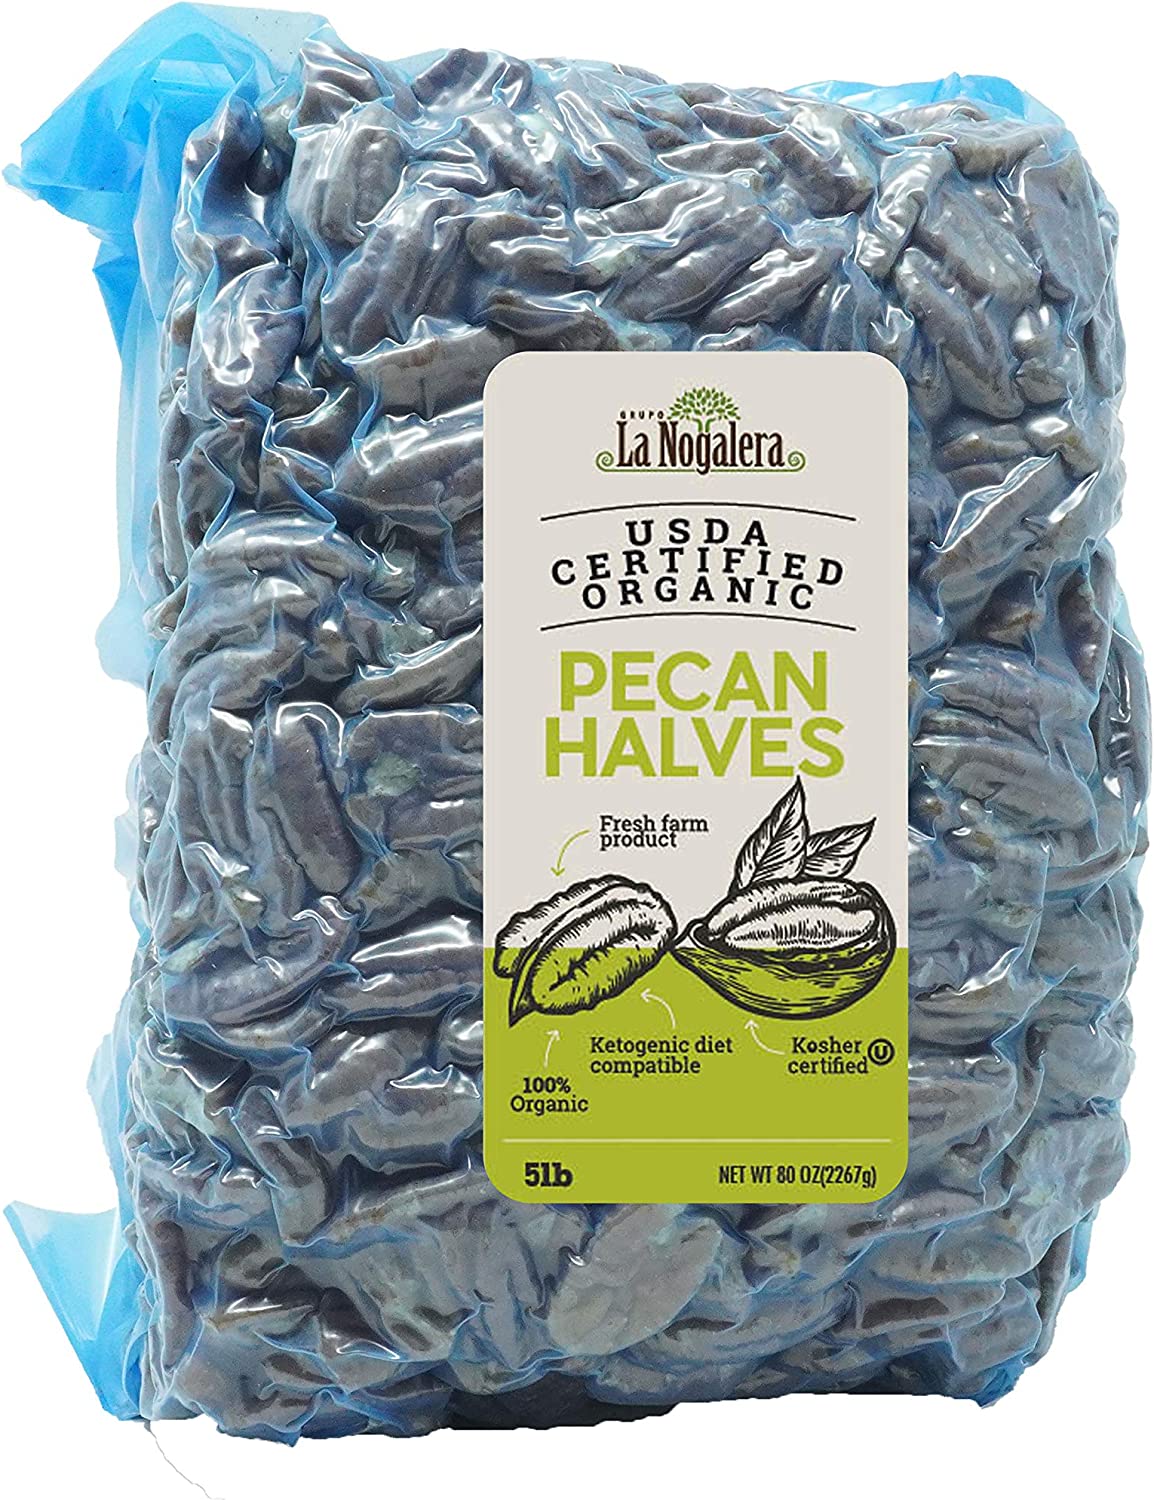 La Nogalera Organic Pecans – USDA Certified Organic Halves in 5 lbs vacuum sealed bag. Pecan nut halves, No Shell, Non-GMO, No Preservatives, Unpasteurized, Kosher and Halal and Ketogenic friendly